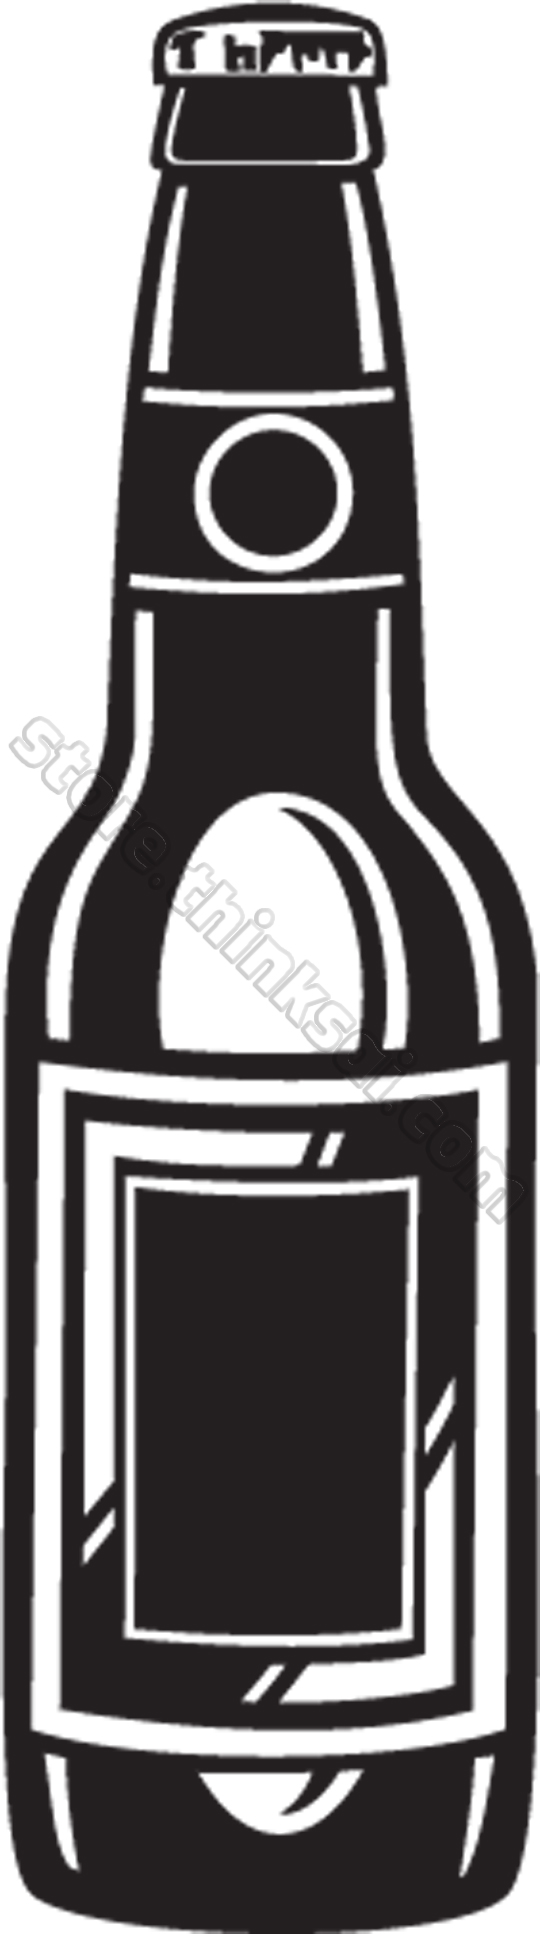 Beer Bottle Clipart I2clipart